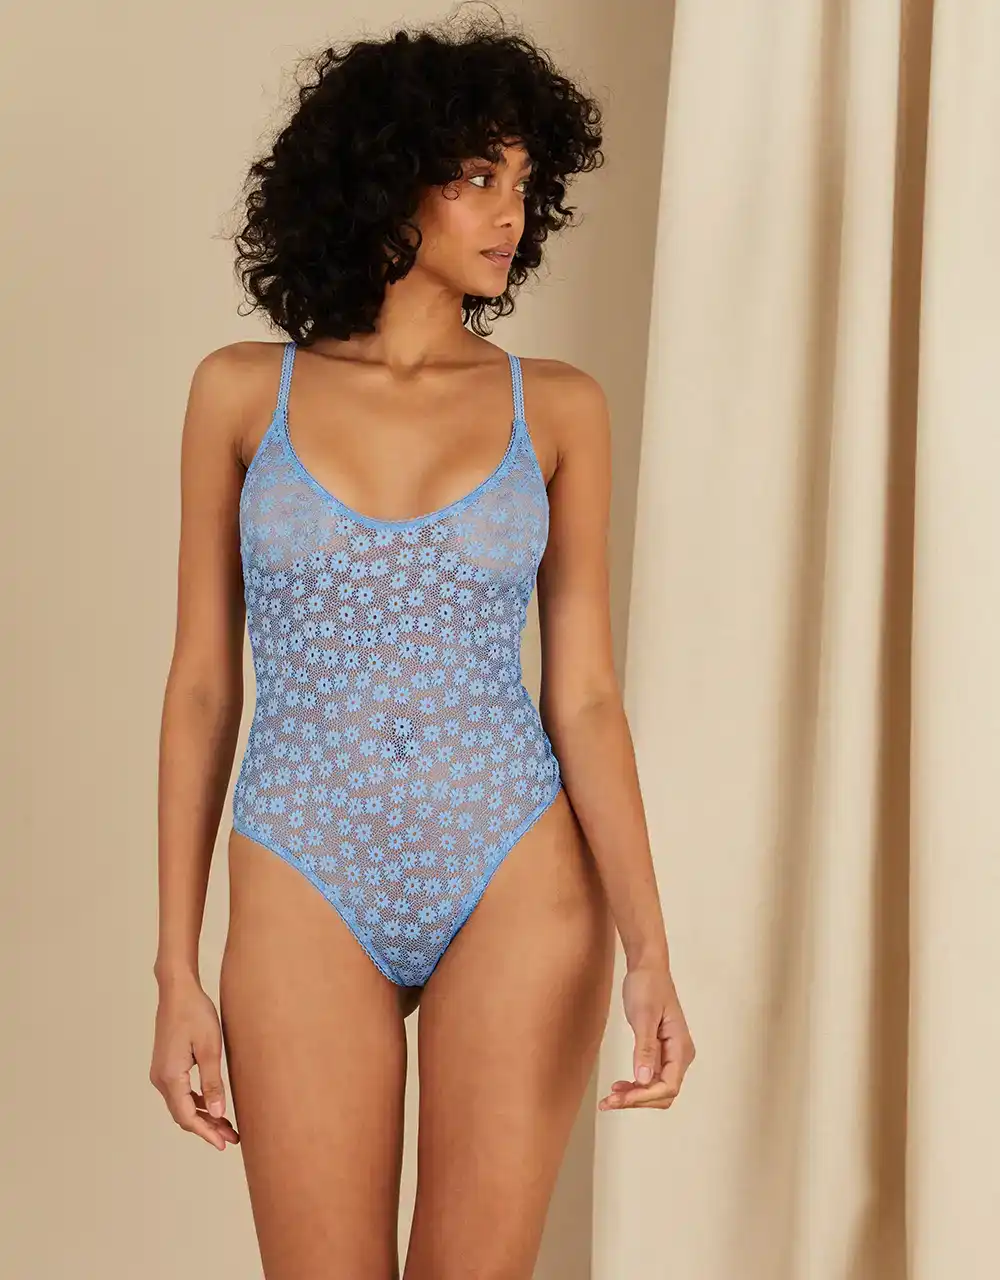 lingerie body Claudia Bleu Provence 34.50 € Girls In Paris